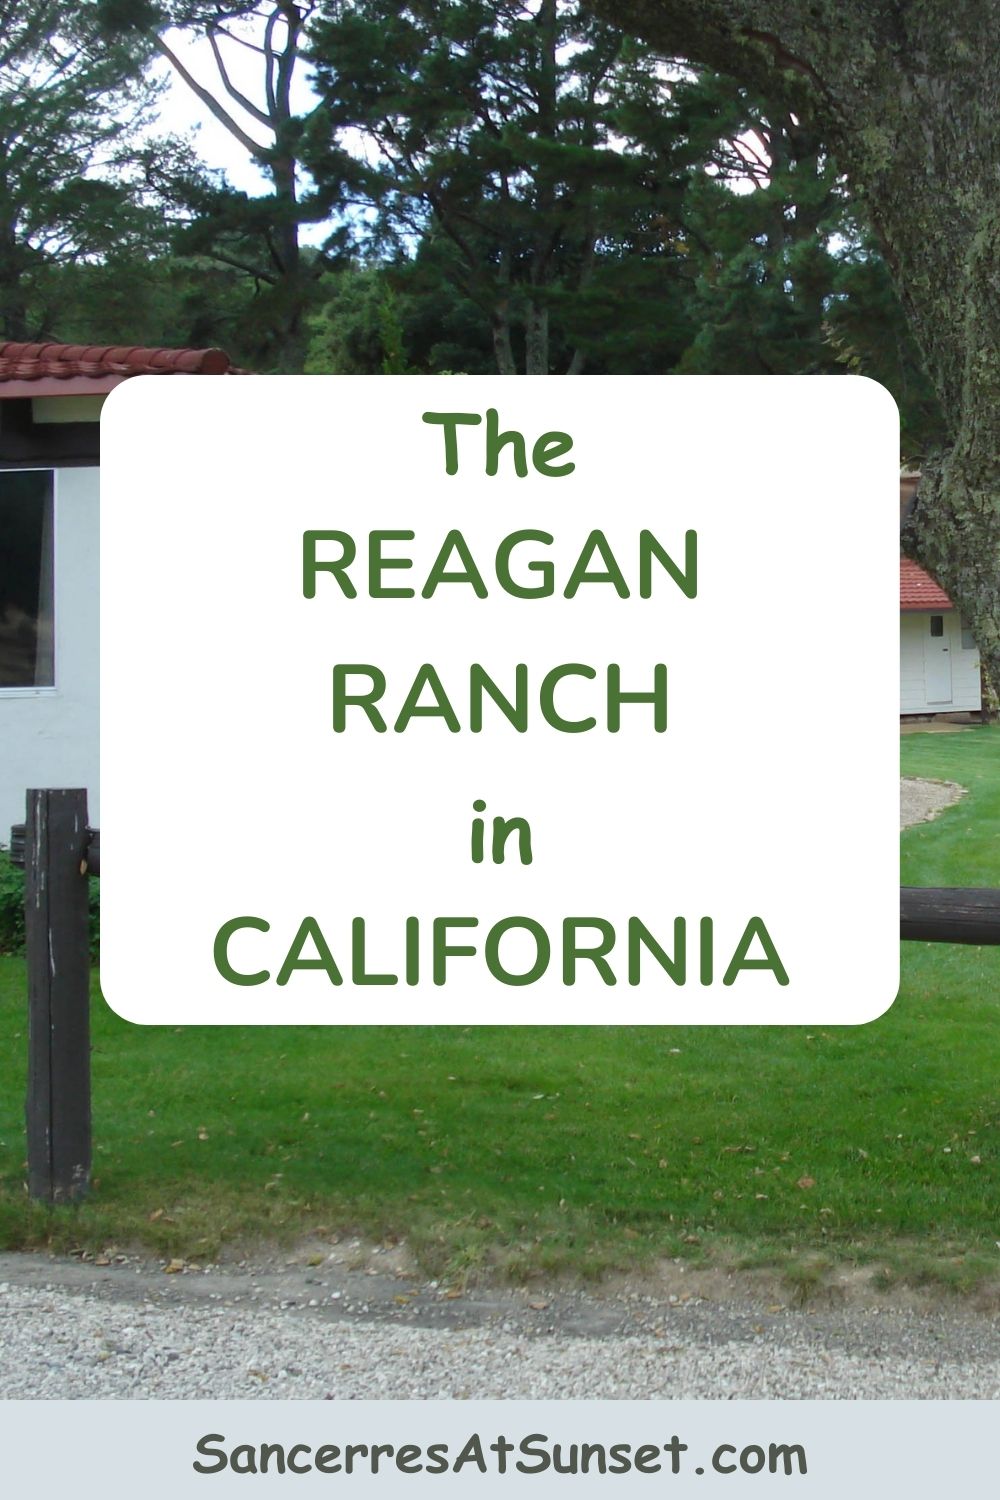 The Reagan Ranch in California